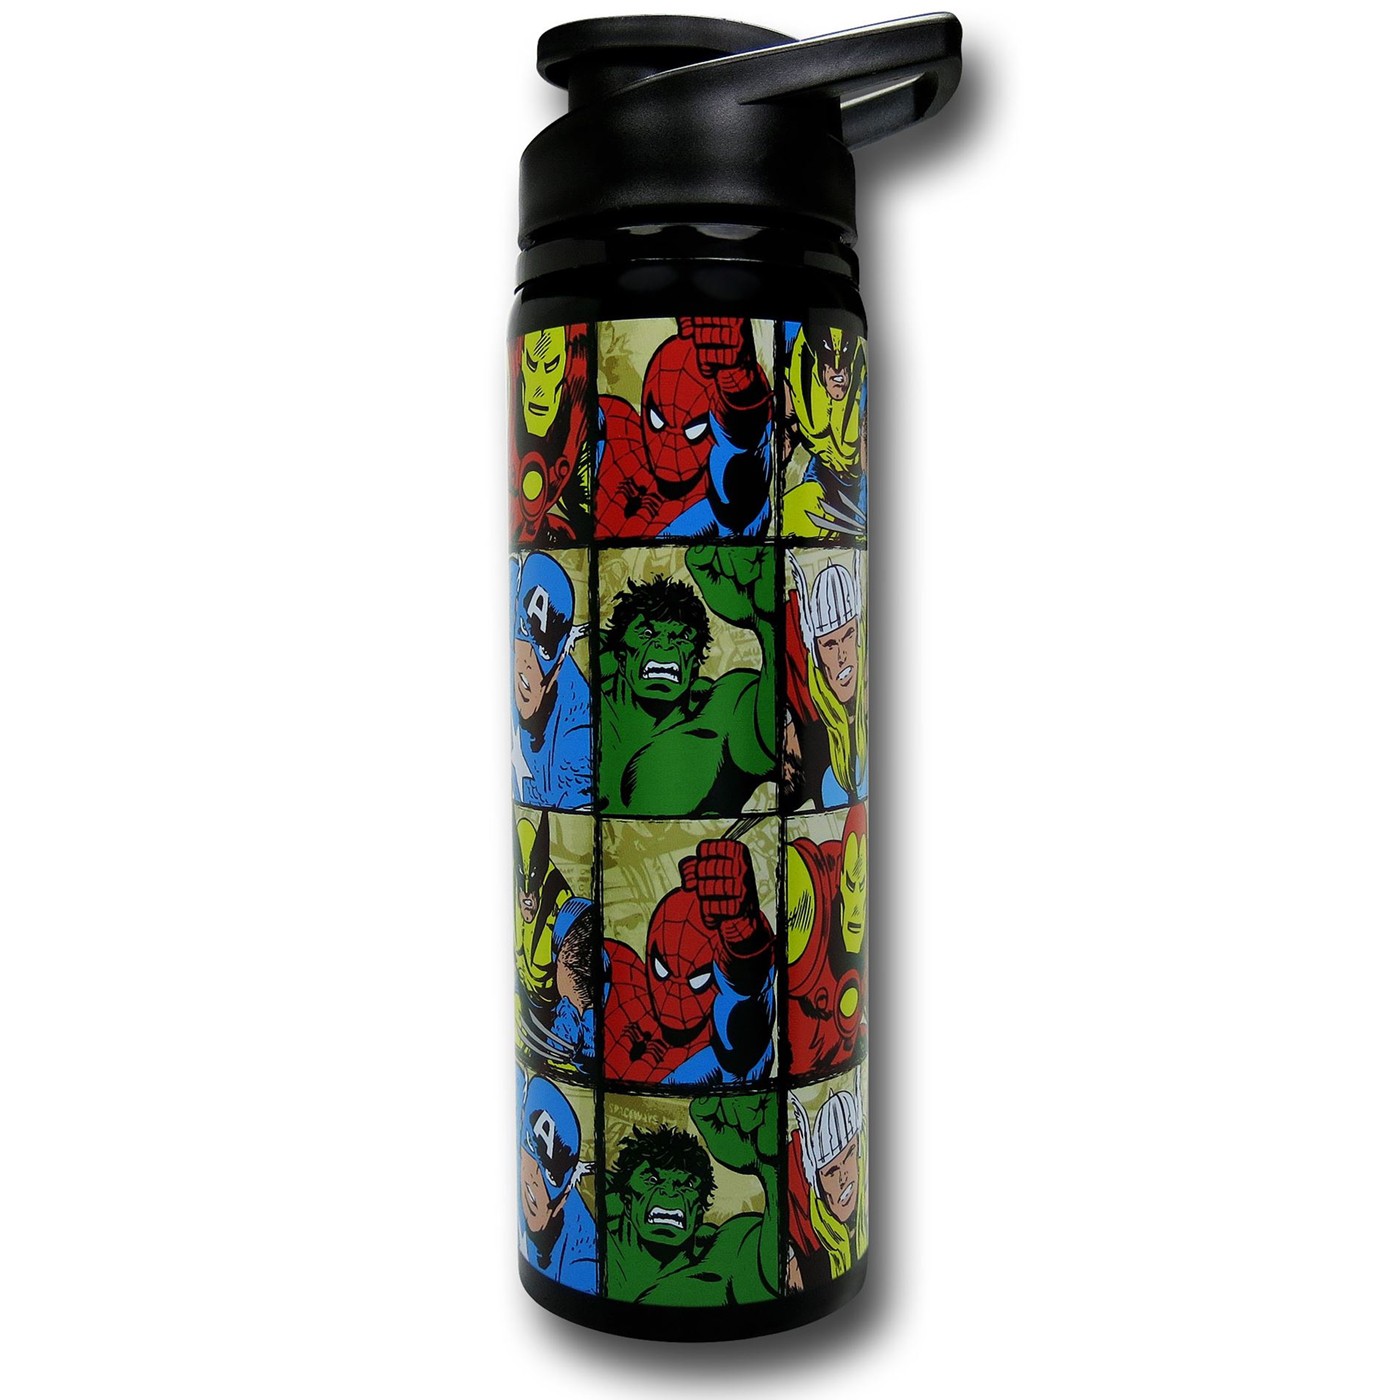 Marvel Avengers Natural Spring Water, 16.9 oz, Pack of 24 Bottles